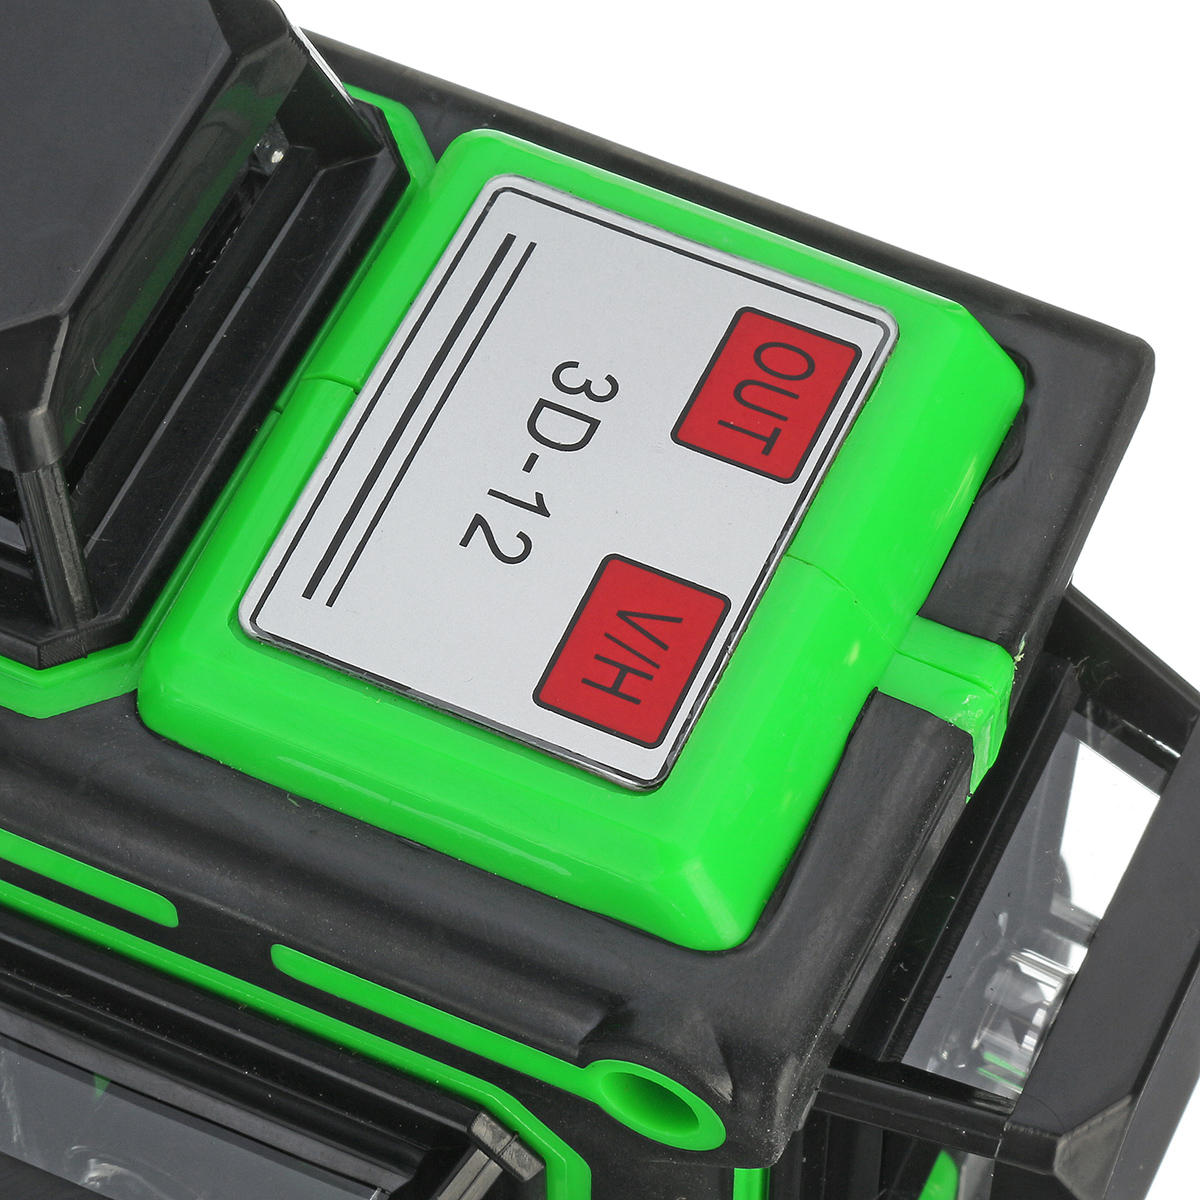 12 Lines Green 3D Laser Level Auto 360 Degree Waterproof Self-Leveling Measure